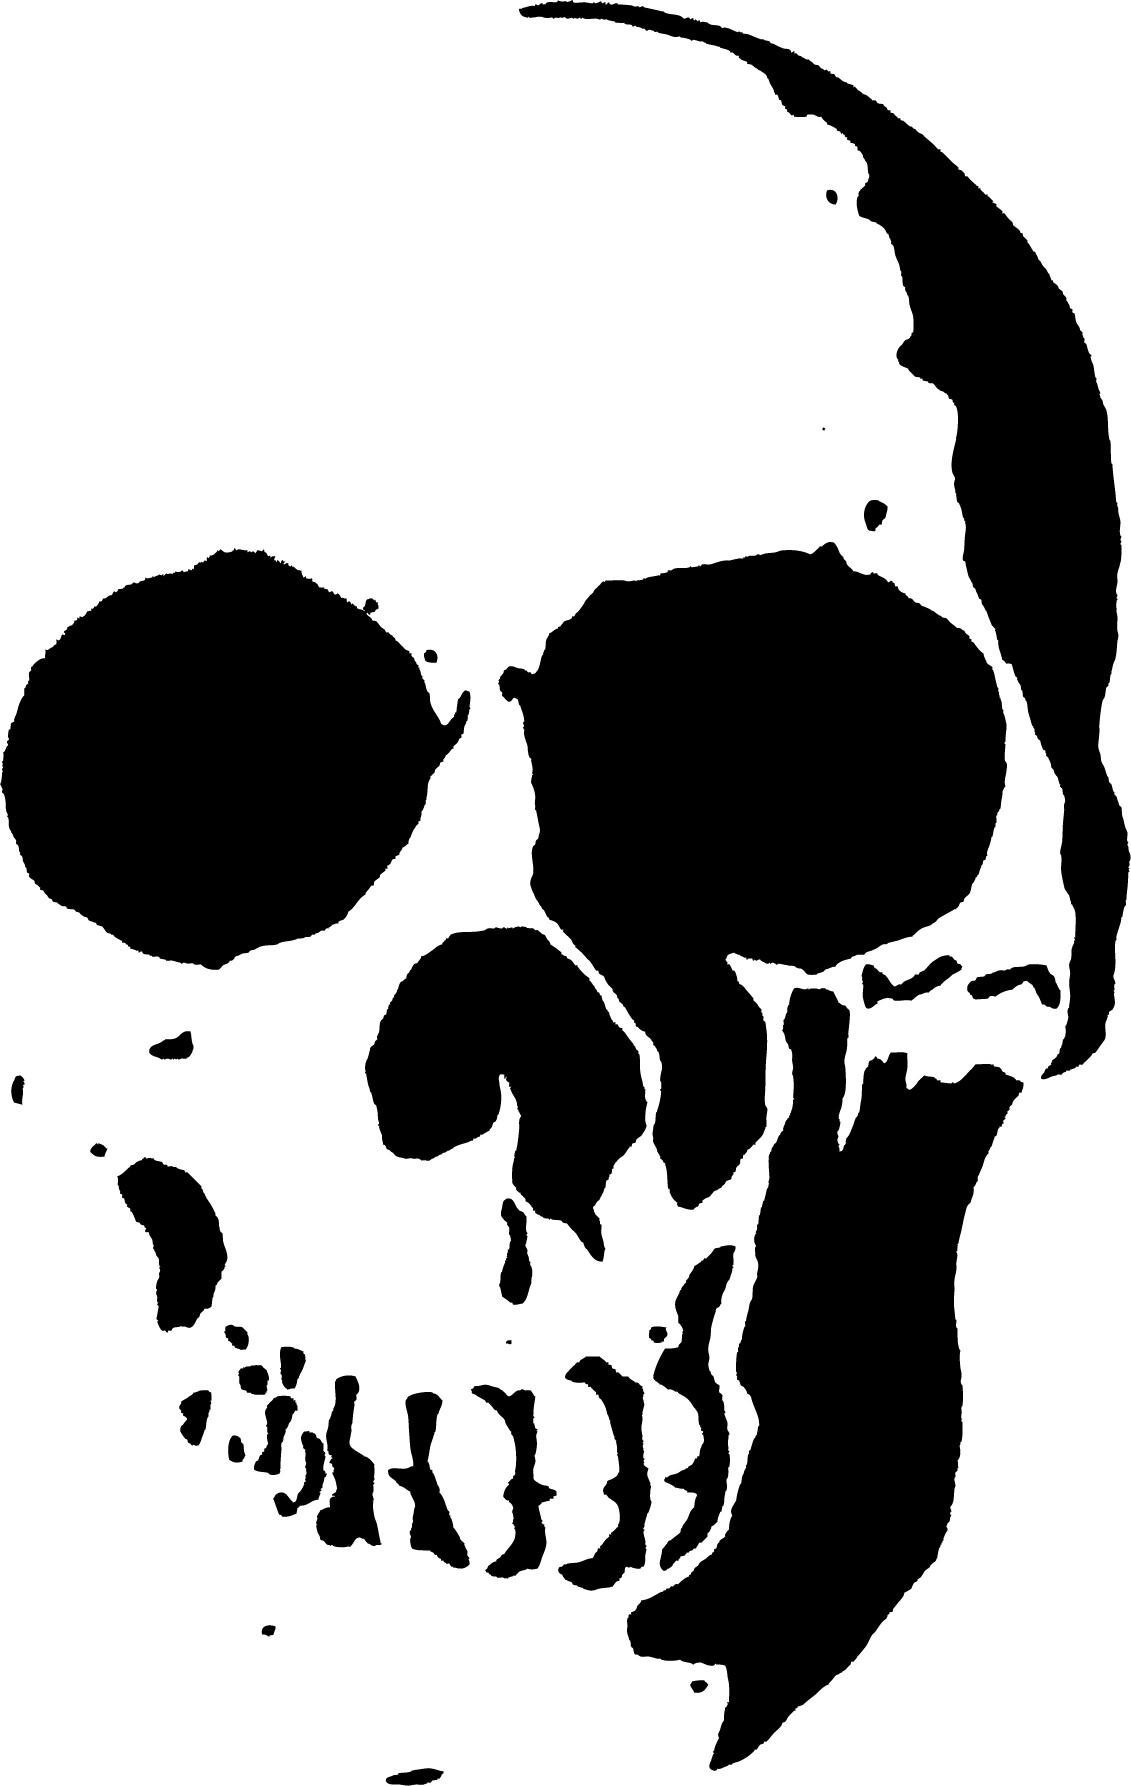 23 Free Skull Stencil Printable Templates | Guide Patterns - Free Printable Stencil Patterns